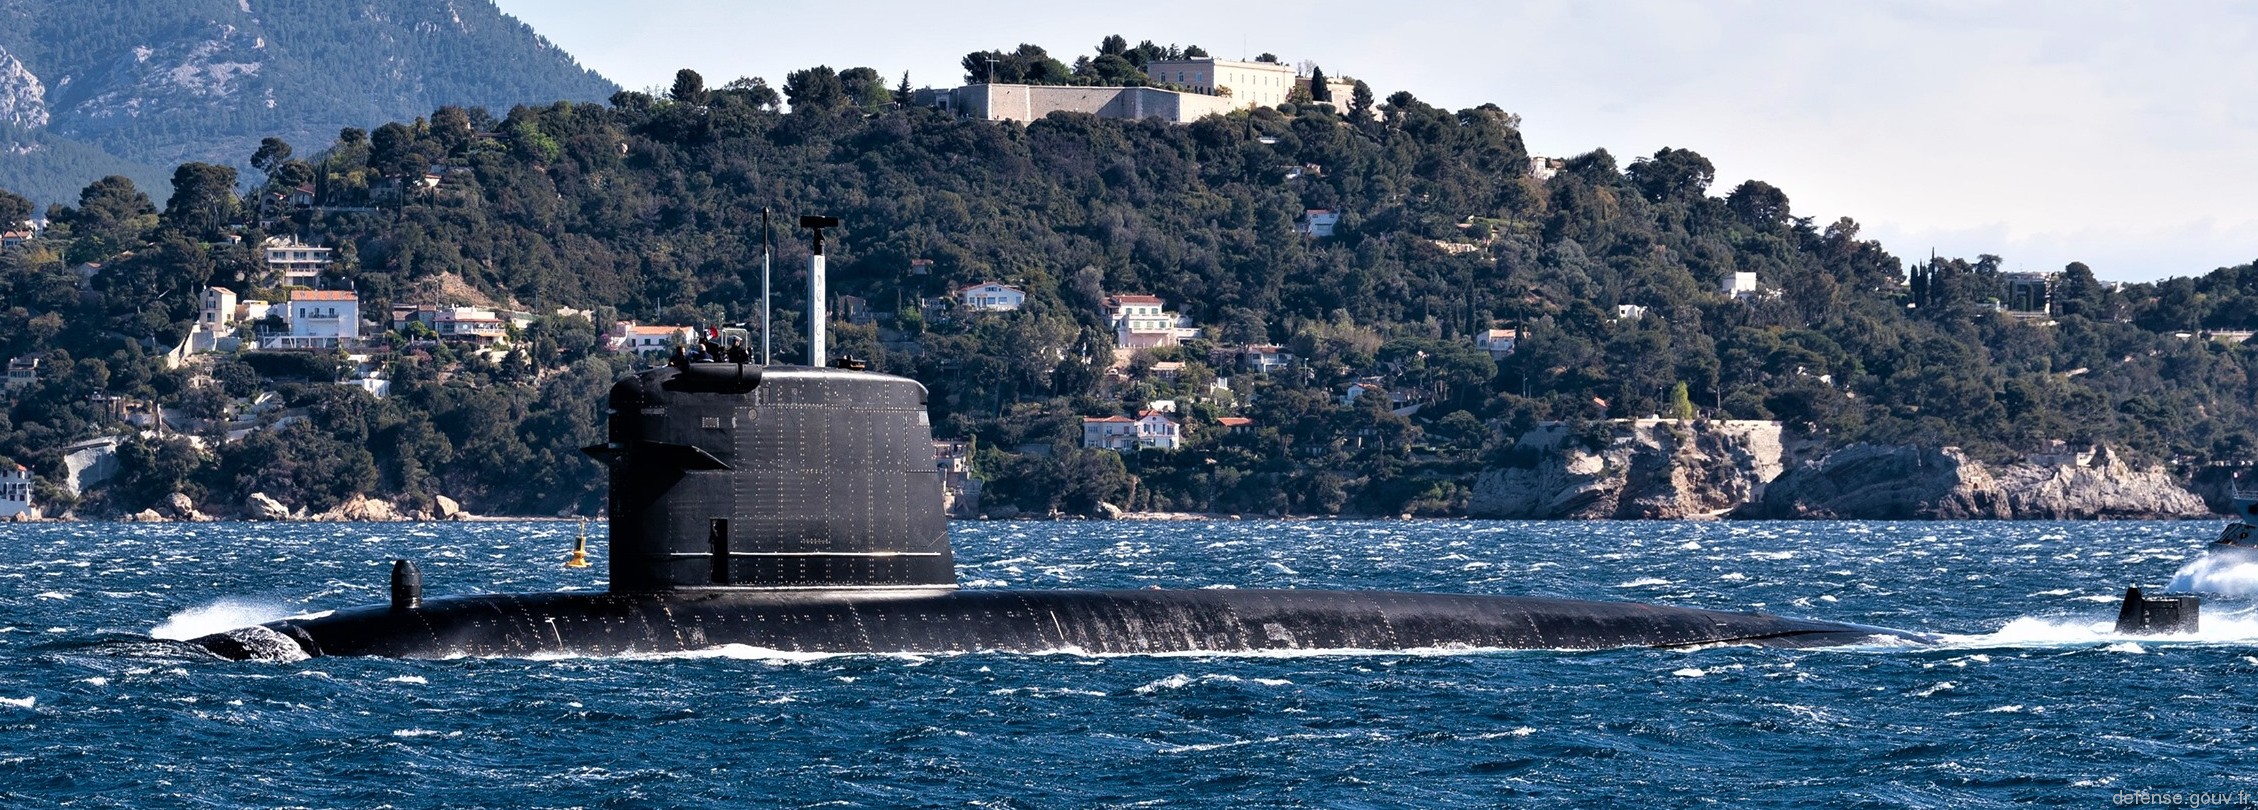 s-604 emeraude rubis class attack submarine ssn french navy marine nationale sna 04